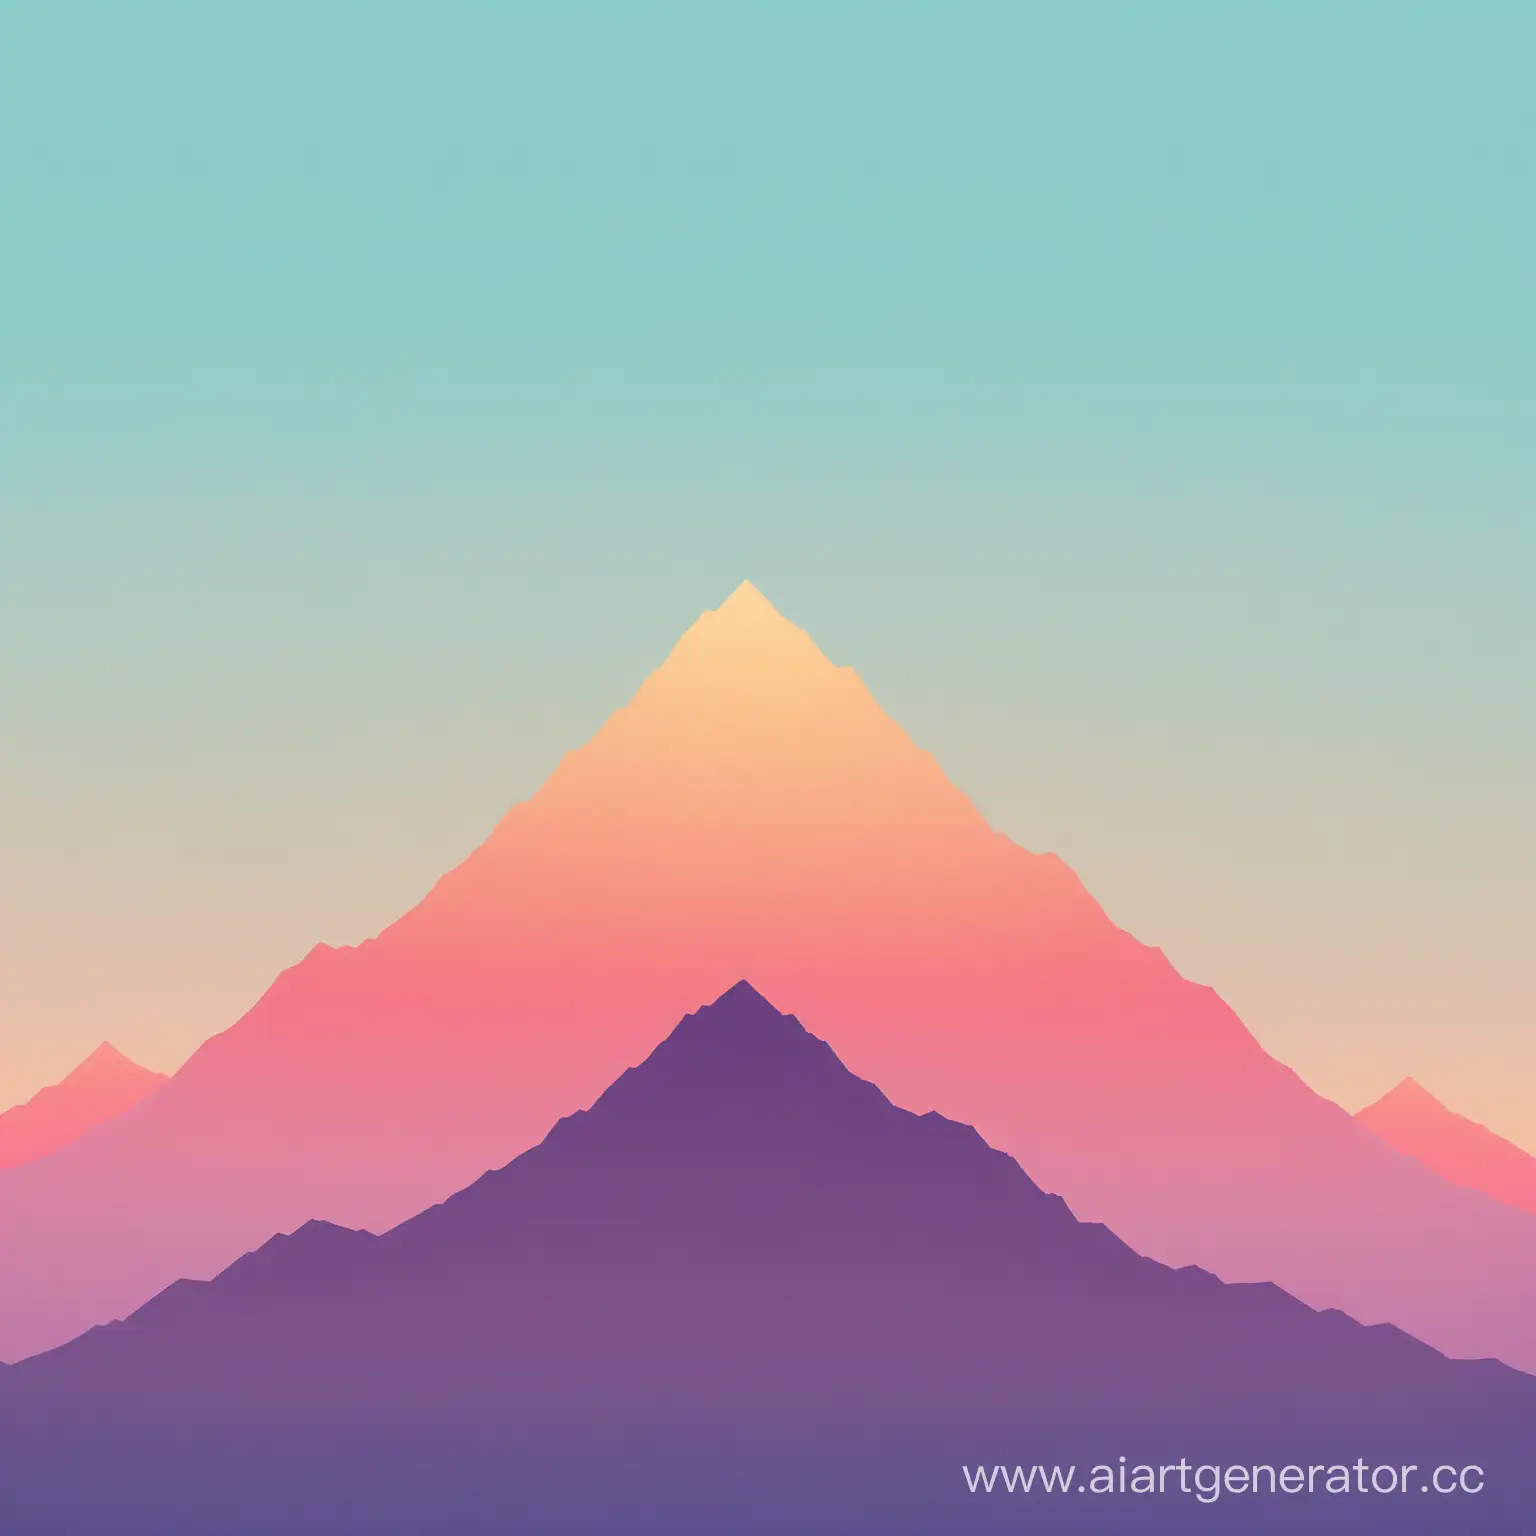 Minimalist-Mountain-Landscape-with-Gradient-Sky